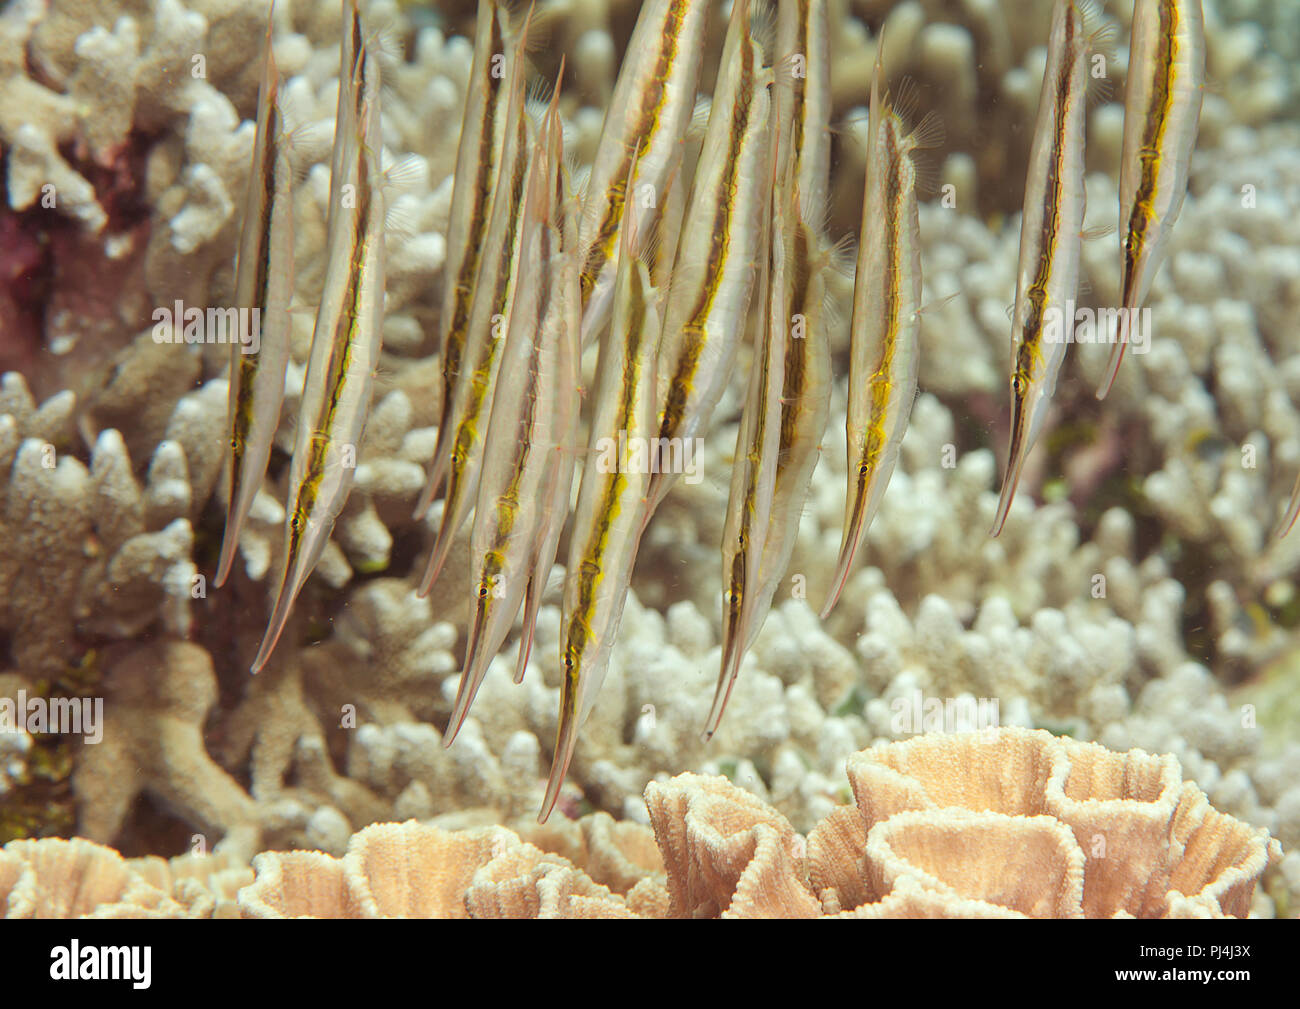 School of razorfish, Aeoliscus strigatus (Günther 1861) swimming over corals of Bali, Indonesia Stock Photo